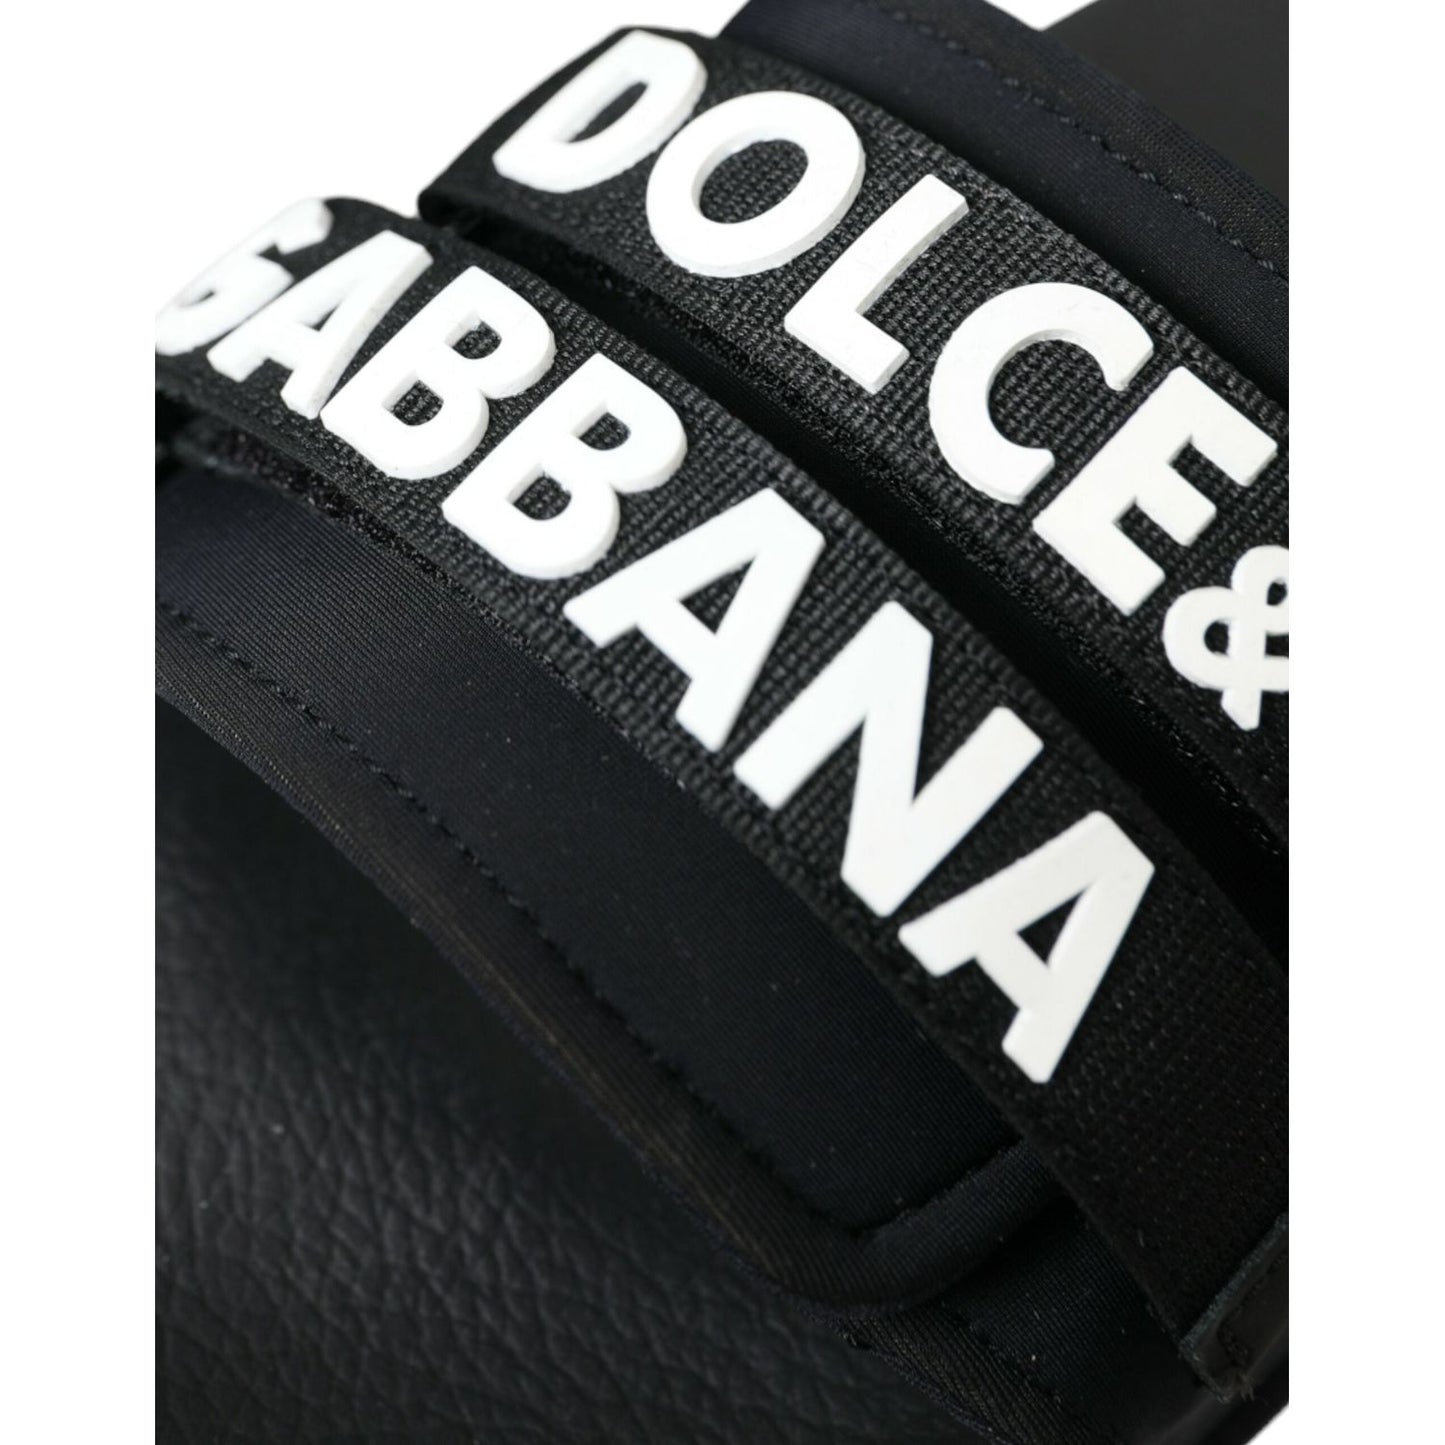 Dolce & Gabbana Black Neoprene Slides Flats Beachwear Shoes black-neoprene-slides-flats-beachwear-shoes